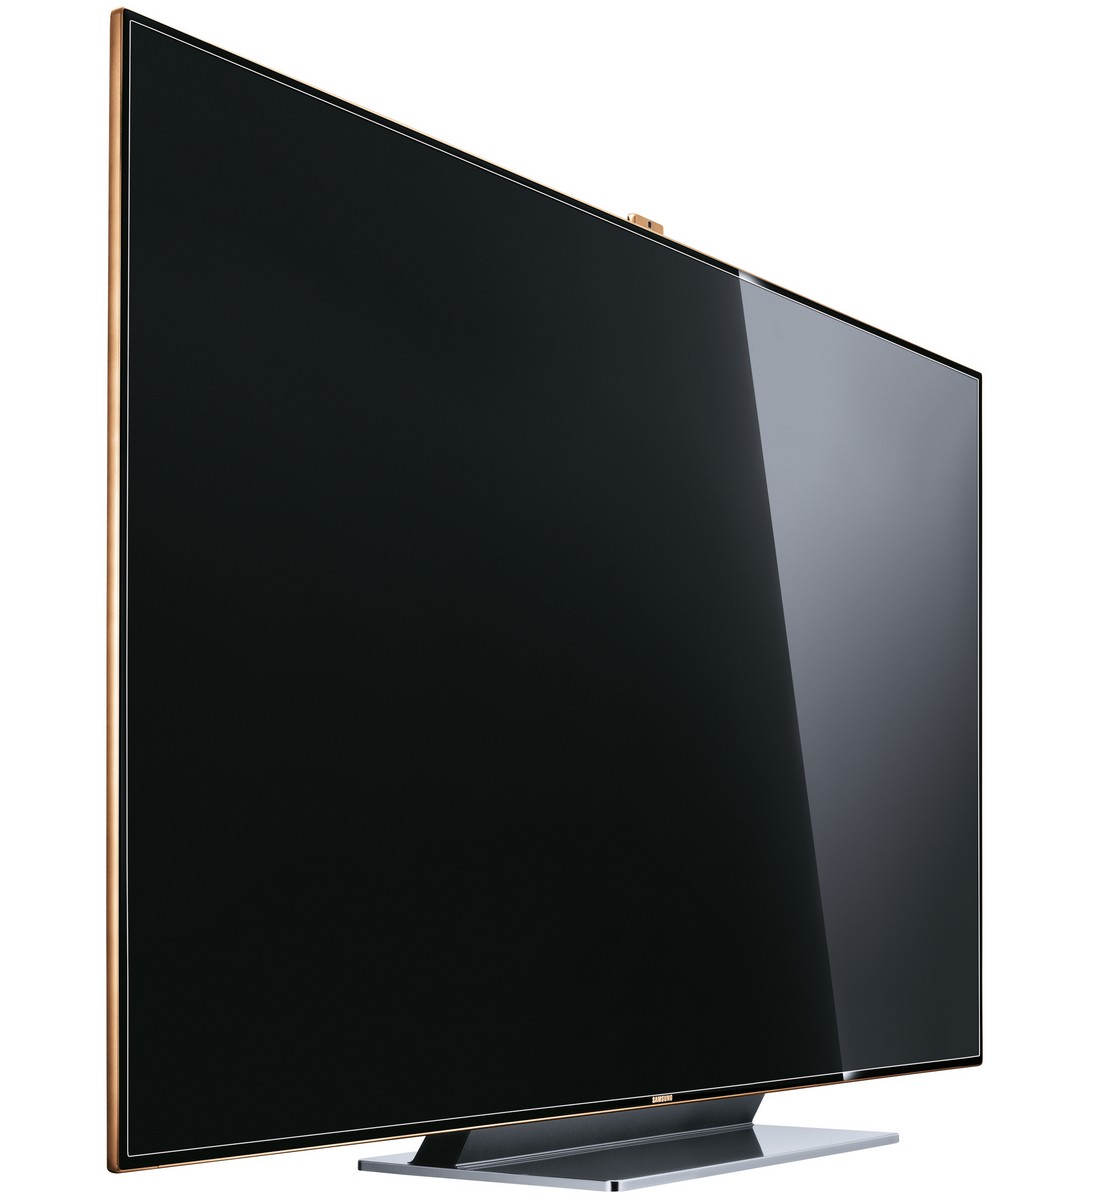 Samsung Smart TV ES9090 3D TV mit Goldkante   CHIP